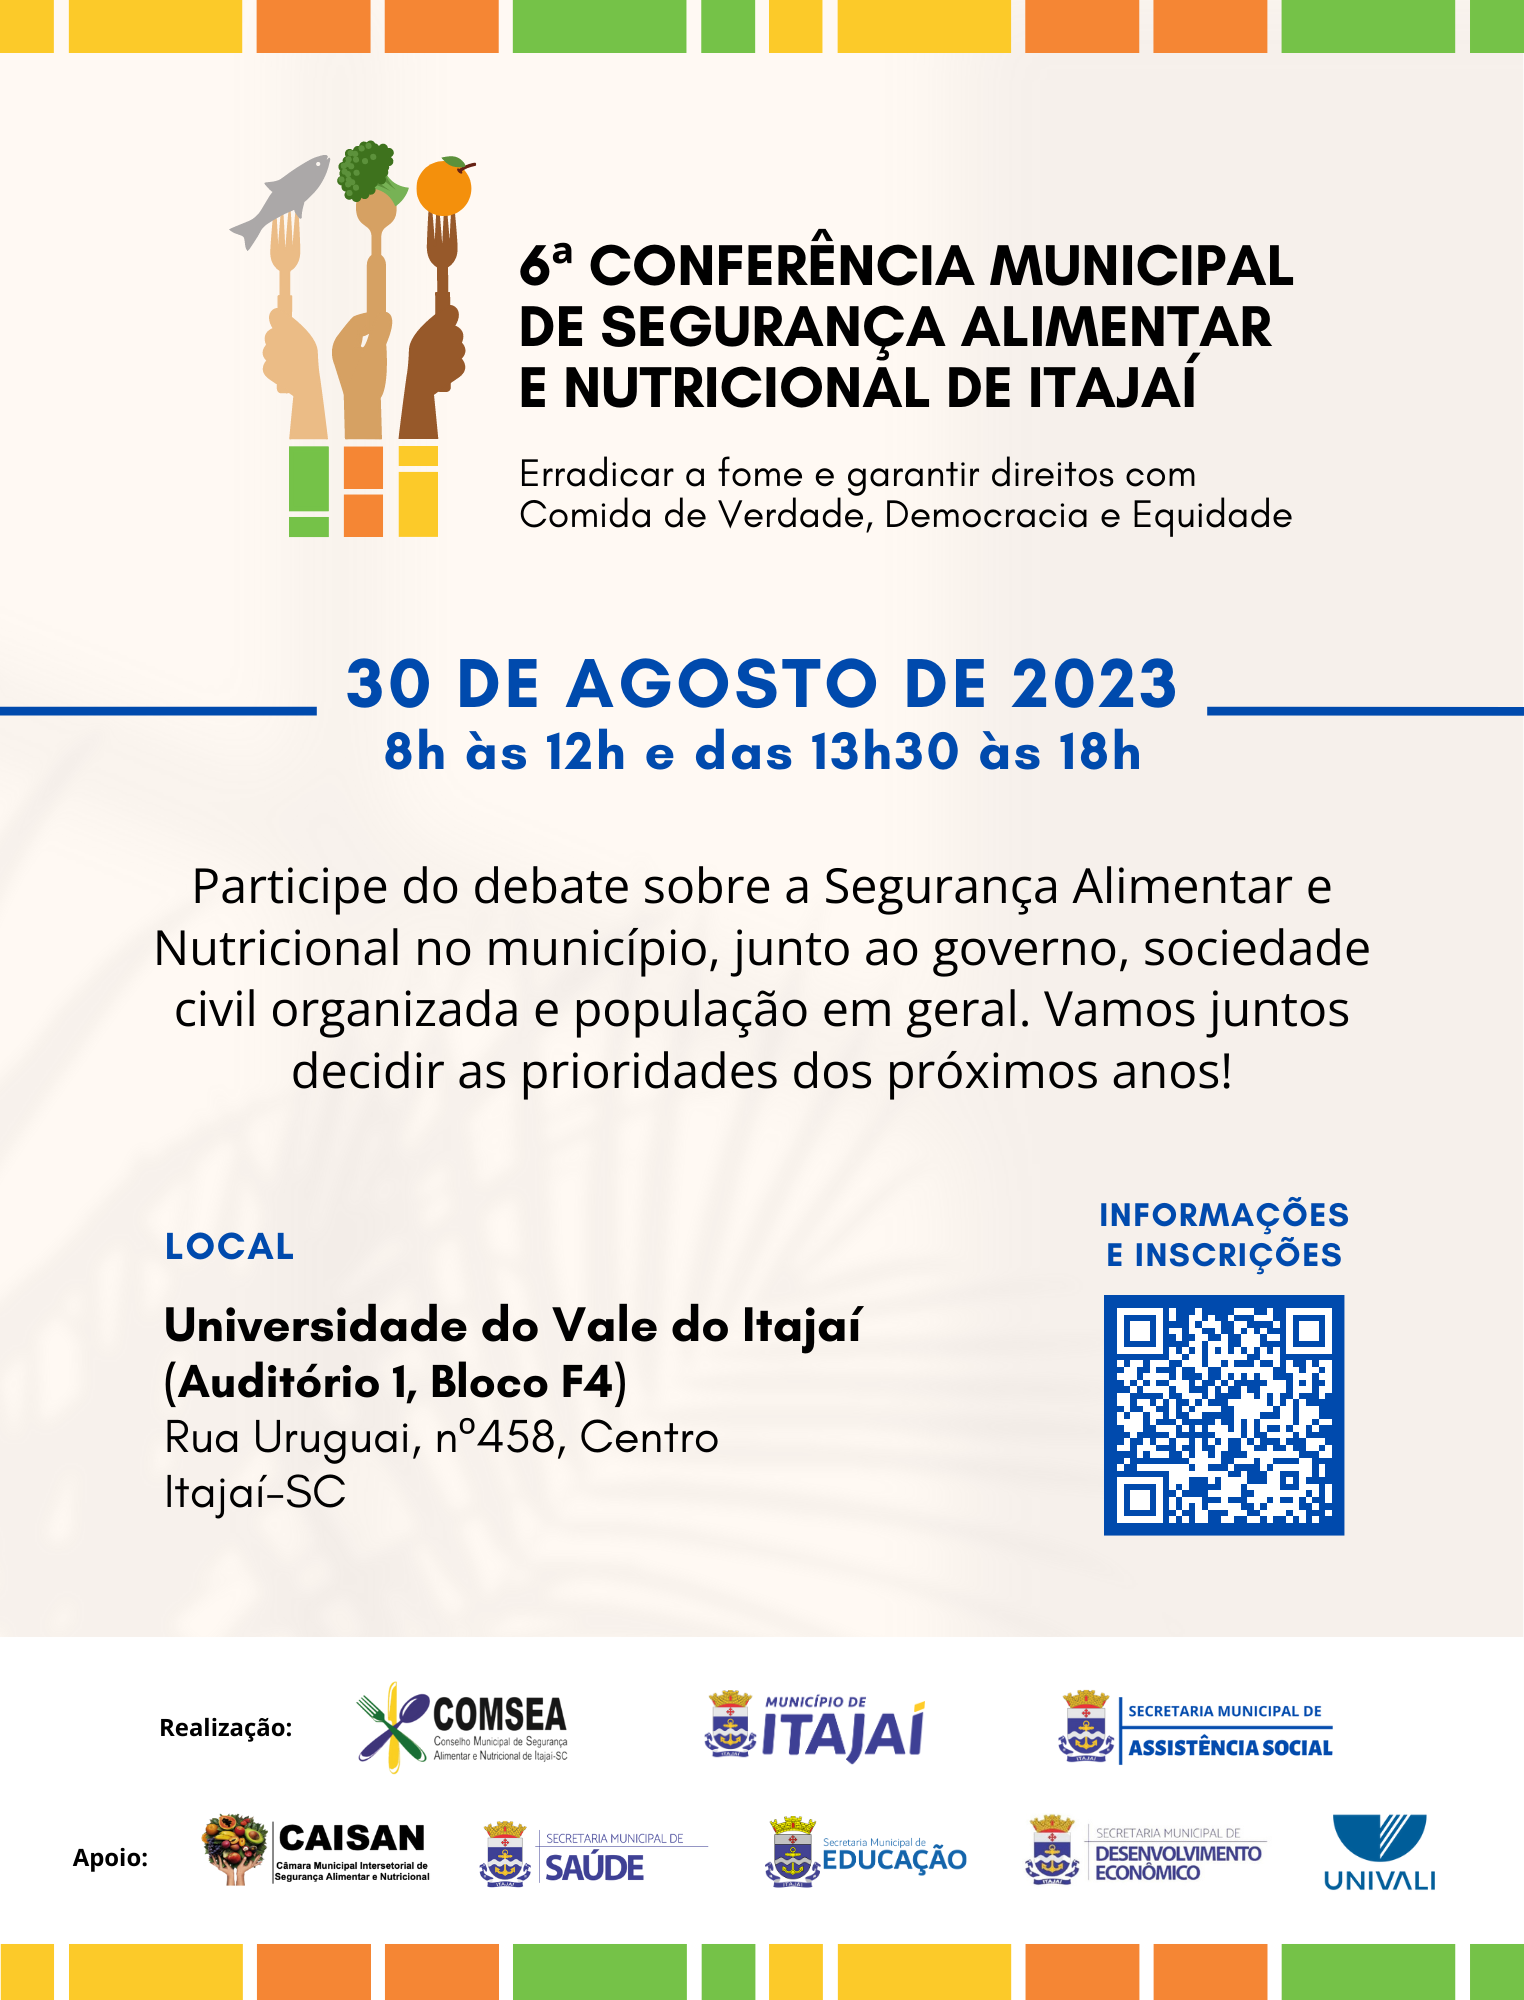 6ª Conferência Municipal de Segurança Alimentar e Nutricional de Itajaí